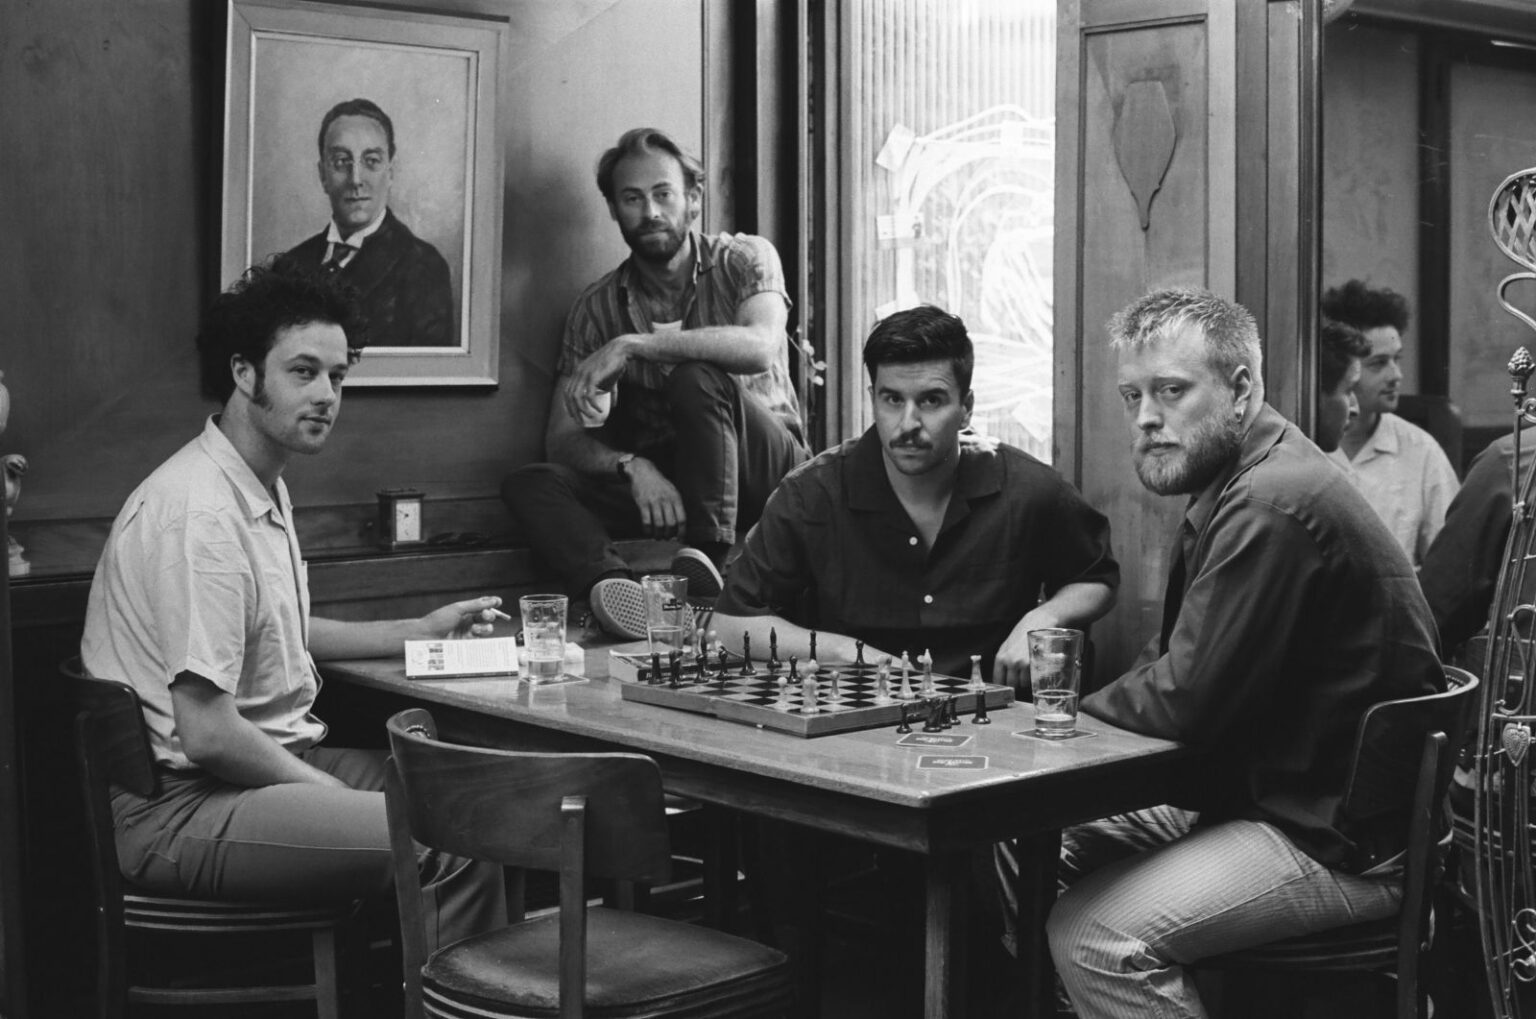 Mannen spelen schaak in café, zwart-wit foto.